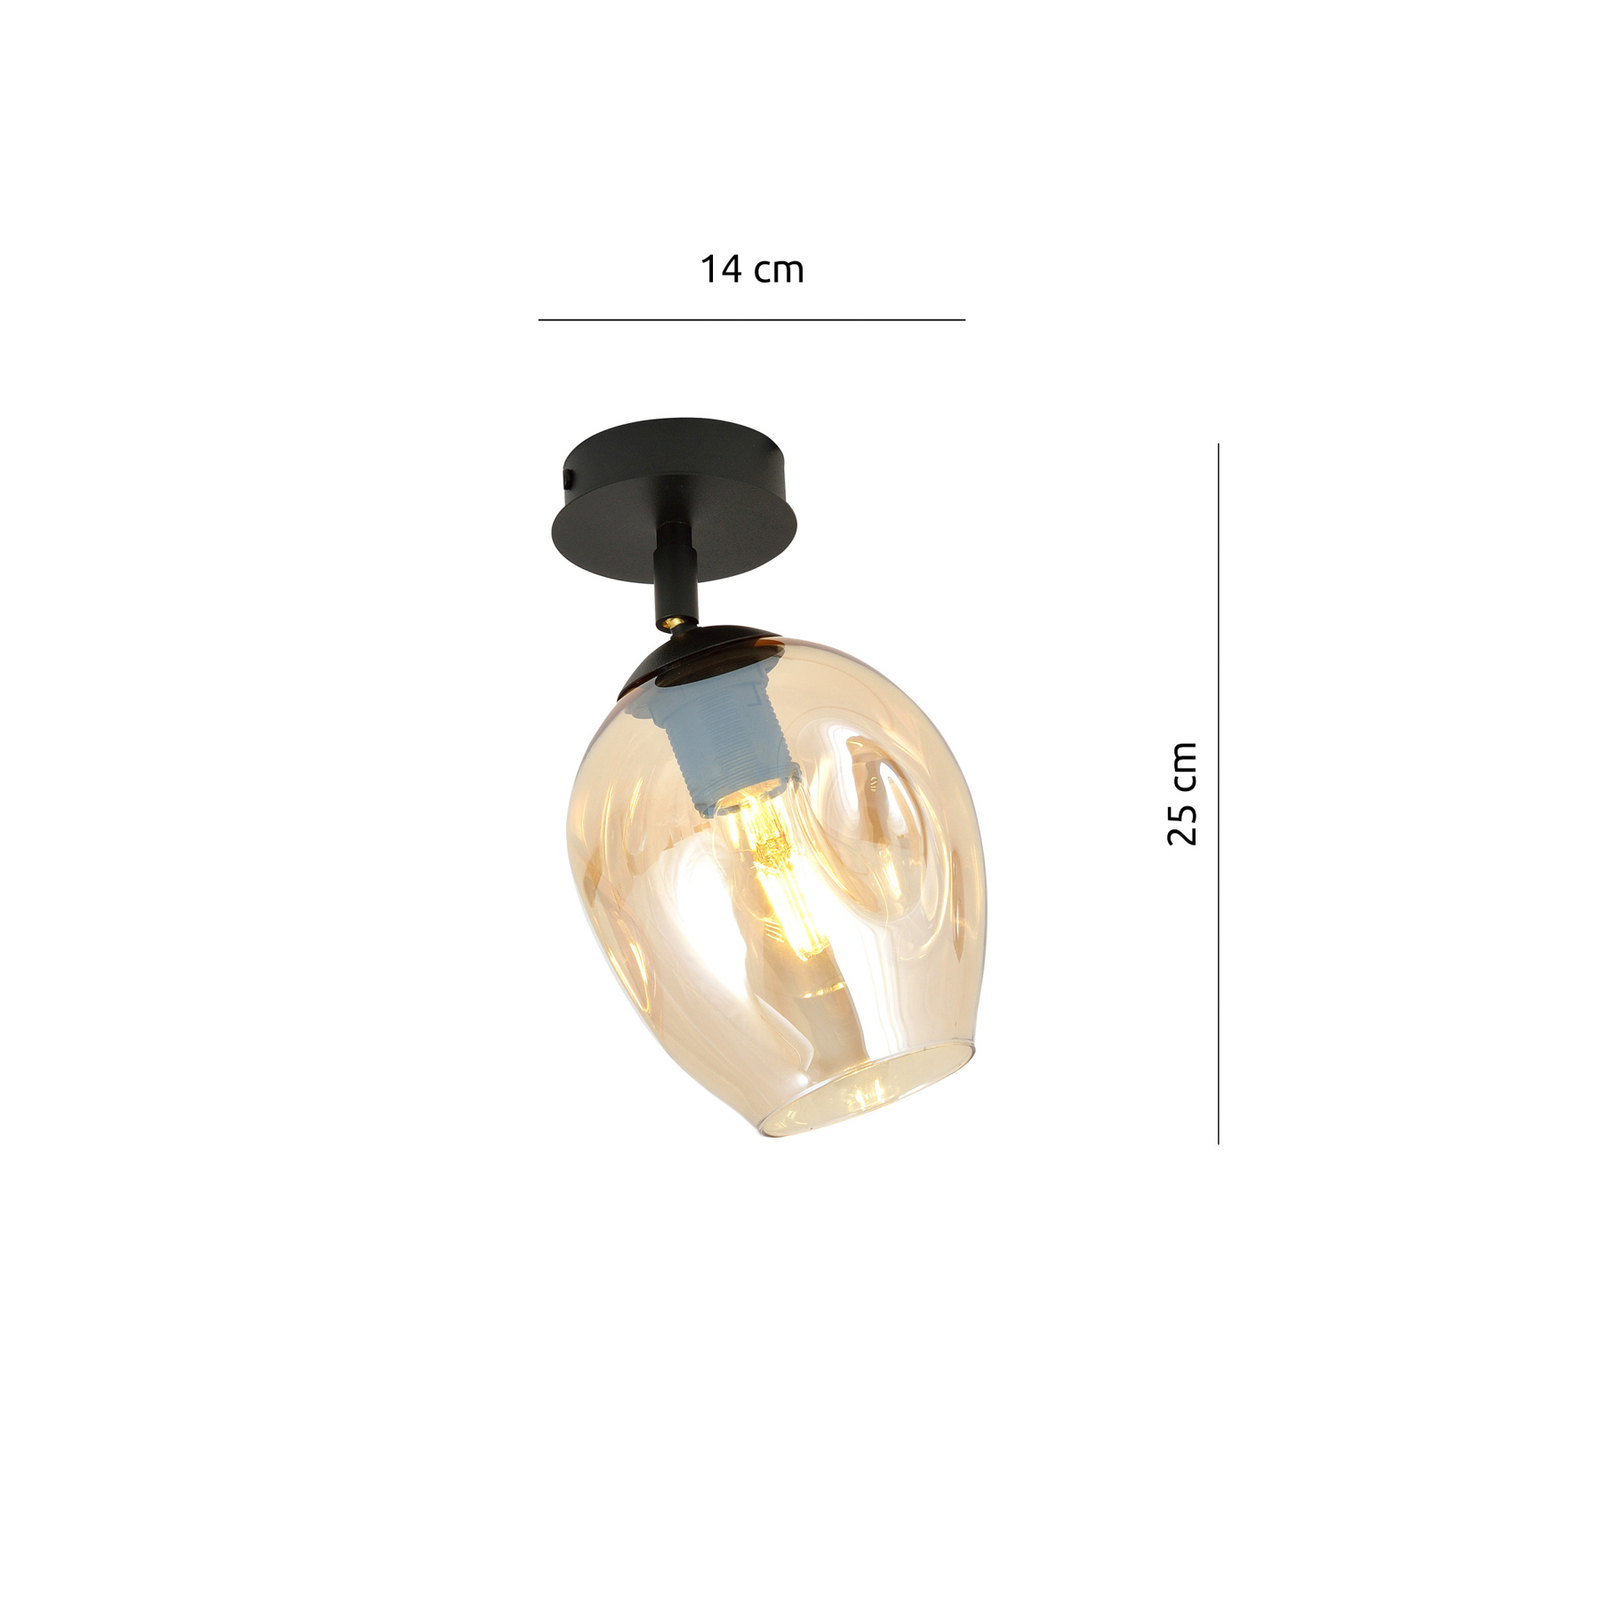 Flow 1 ceiling light one-bulb amber